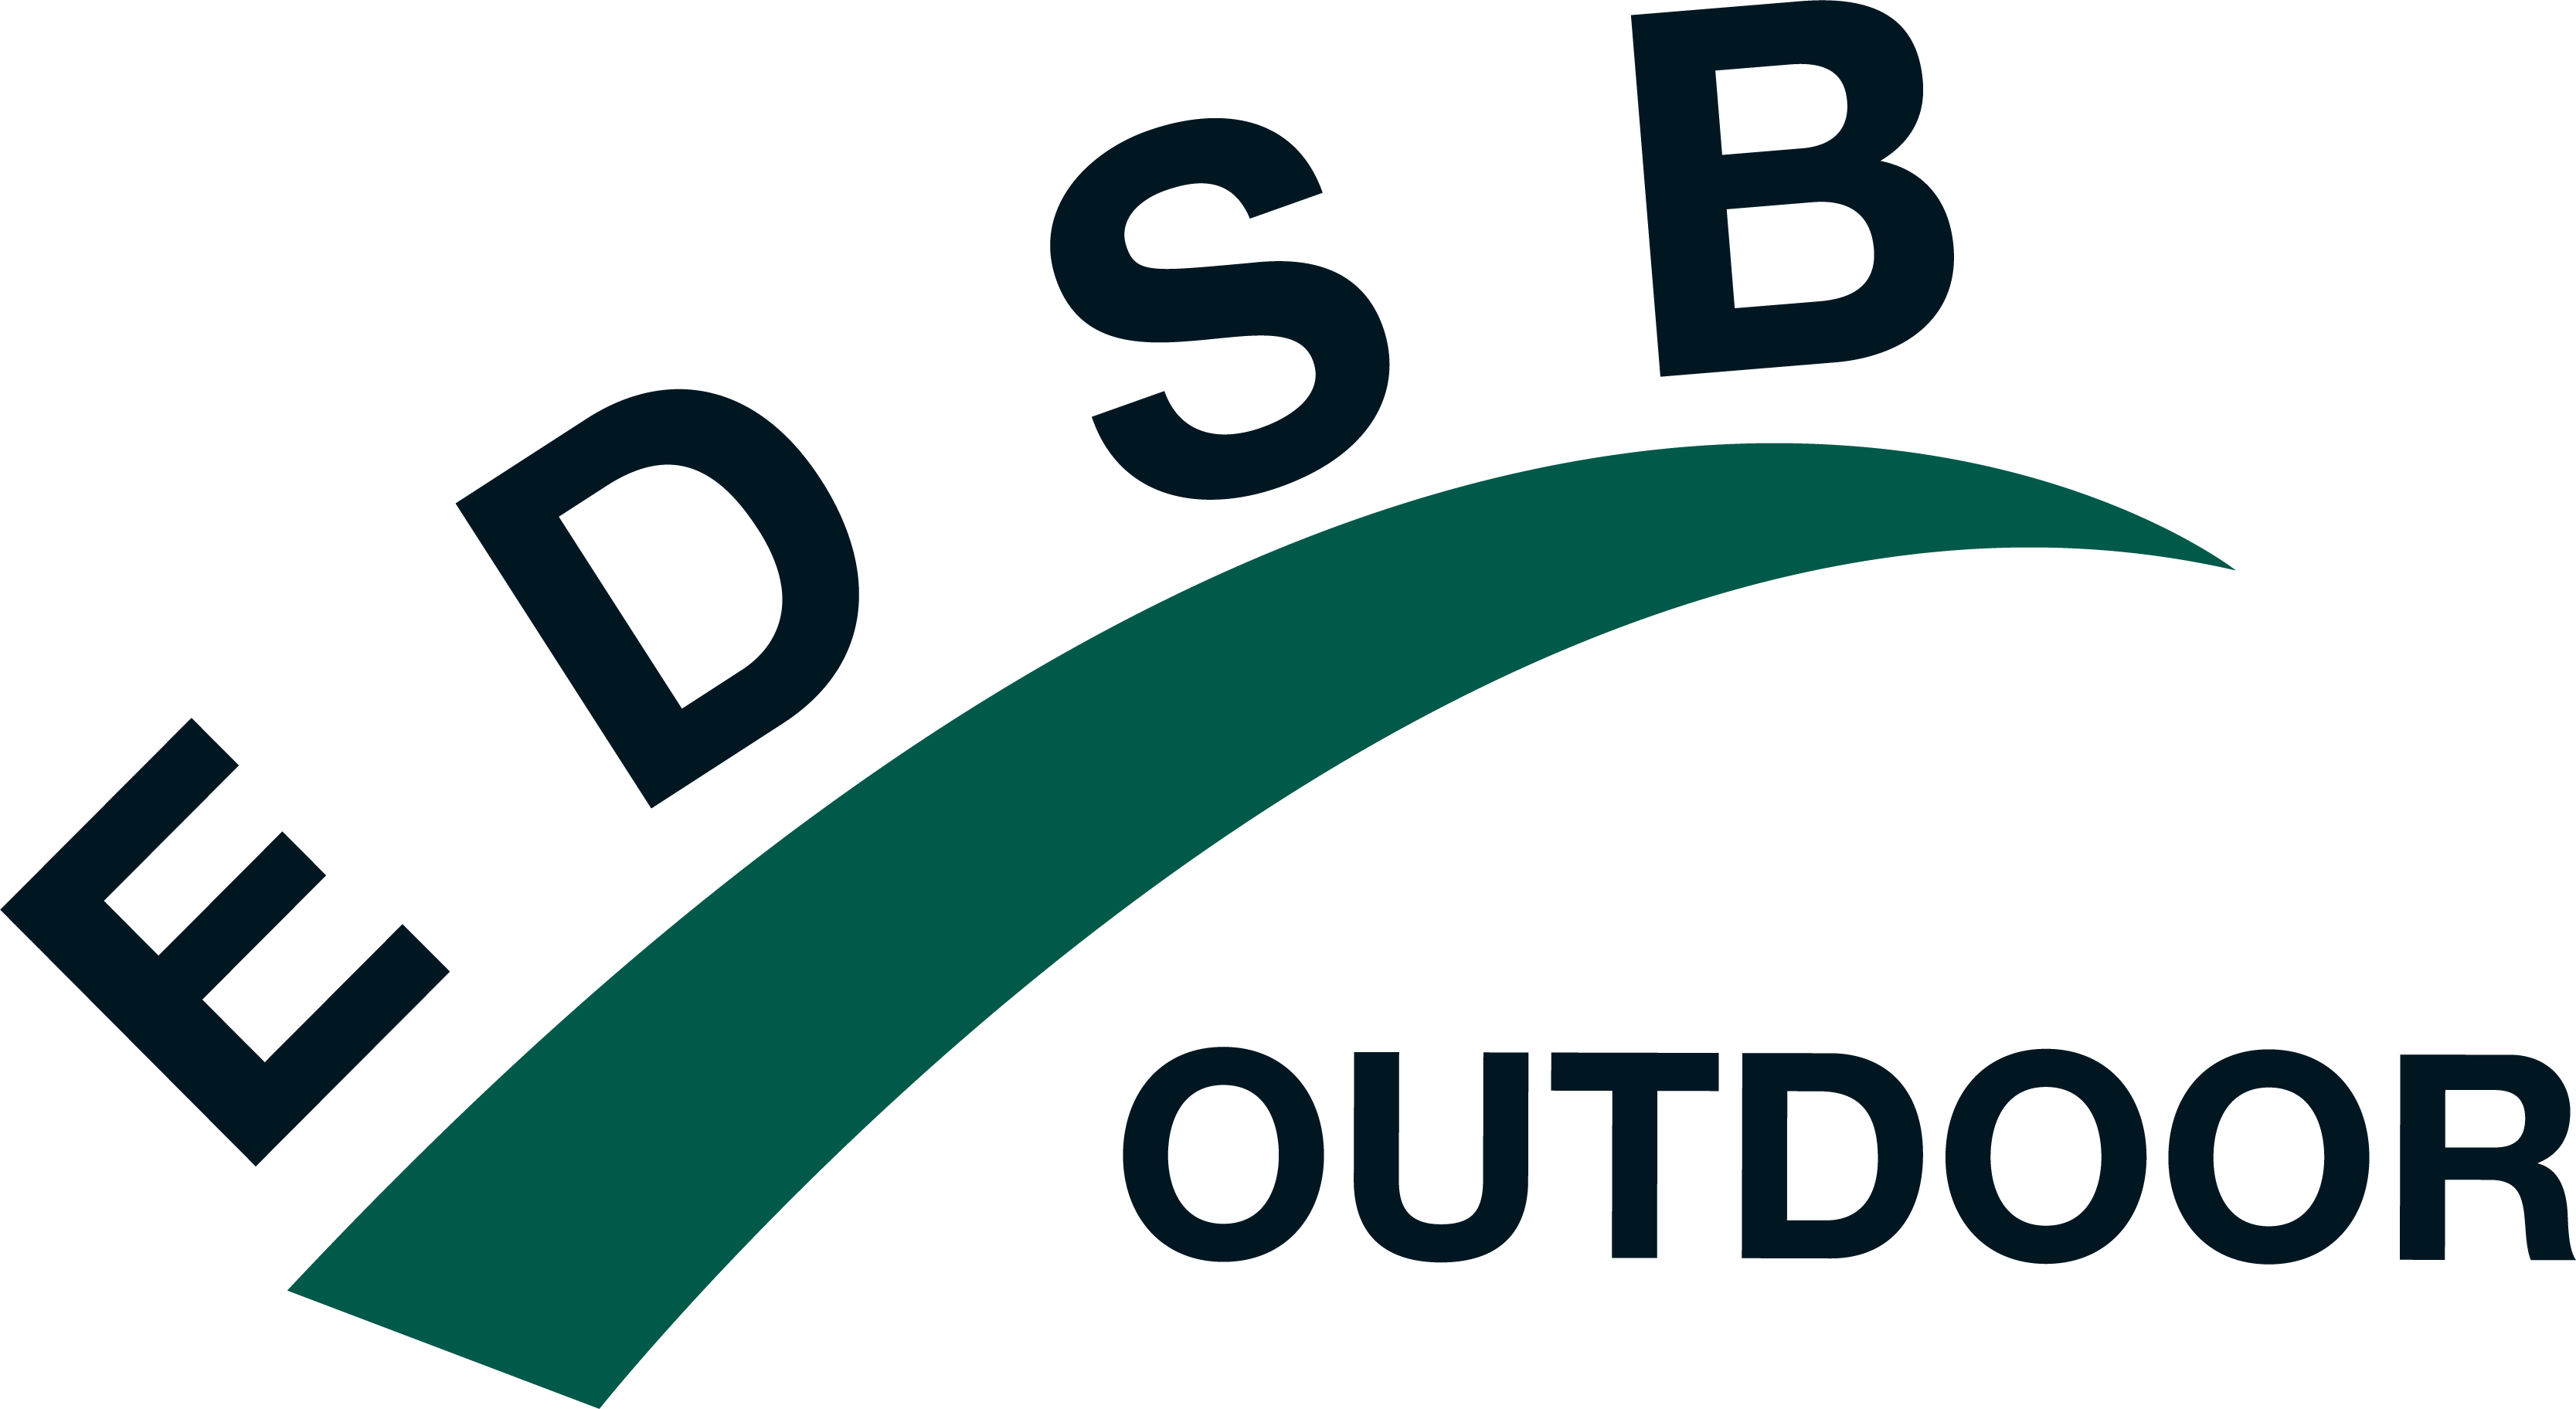 EDSB Outdoor Sdn Bhd